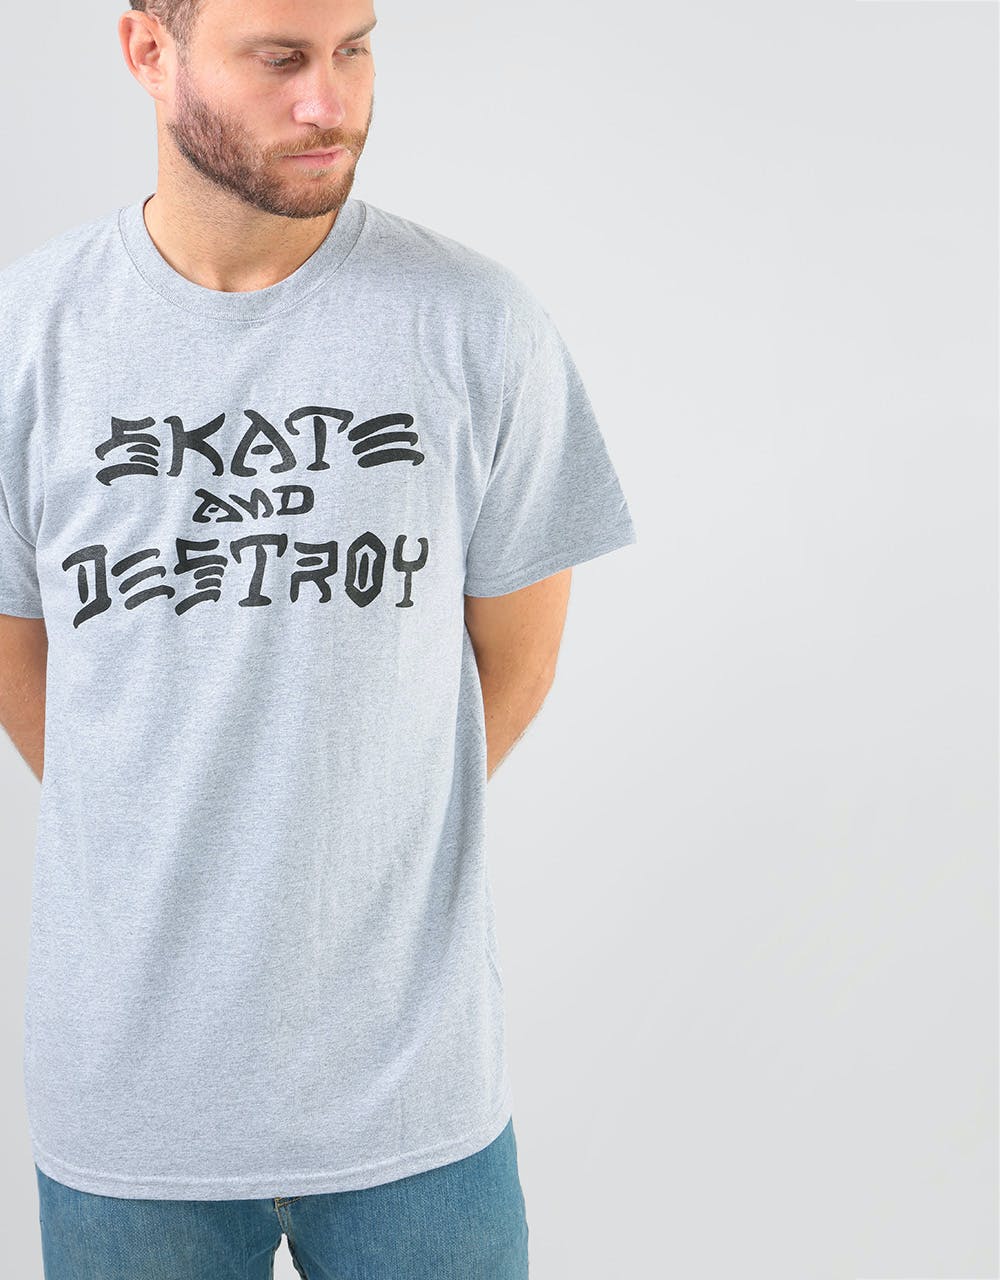 Thrasher Skate and Destroy T-Shirt - Heather Grey